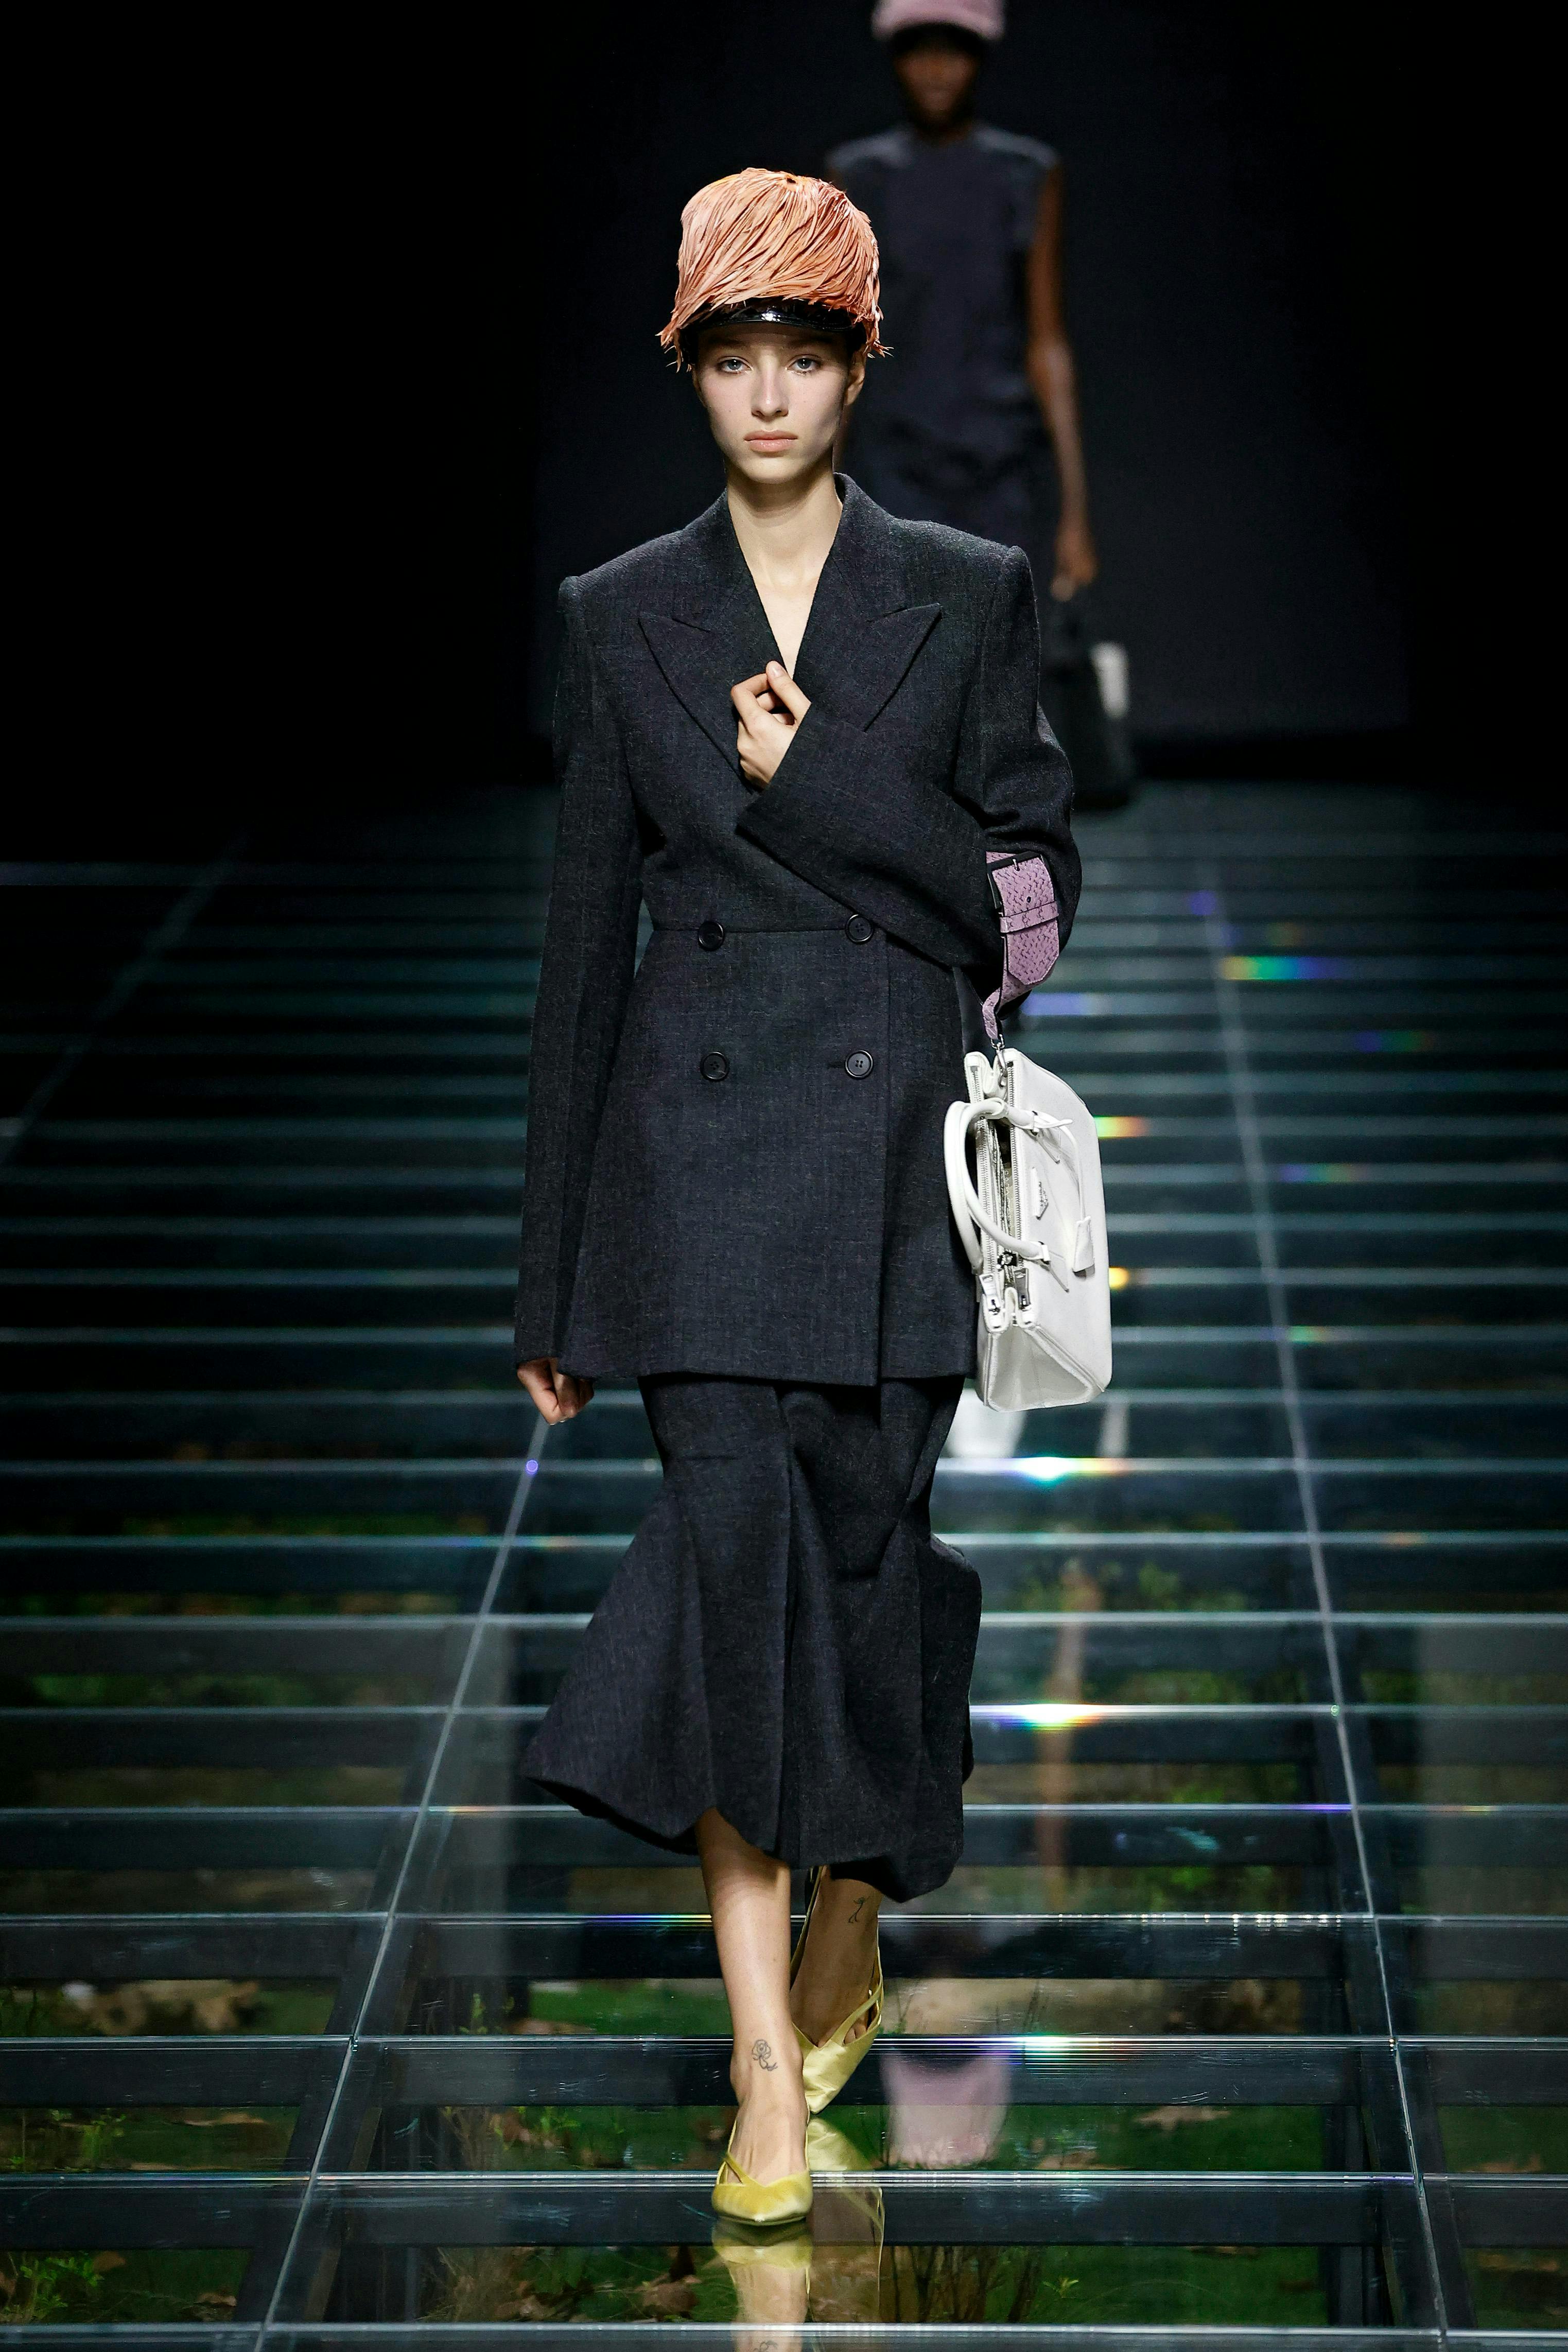 model on runway wearing black blazer and skirt